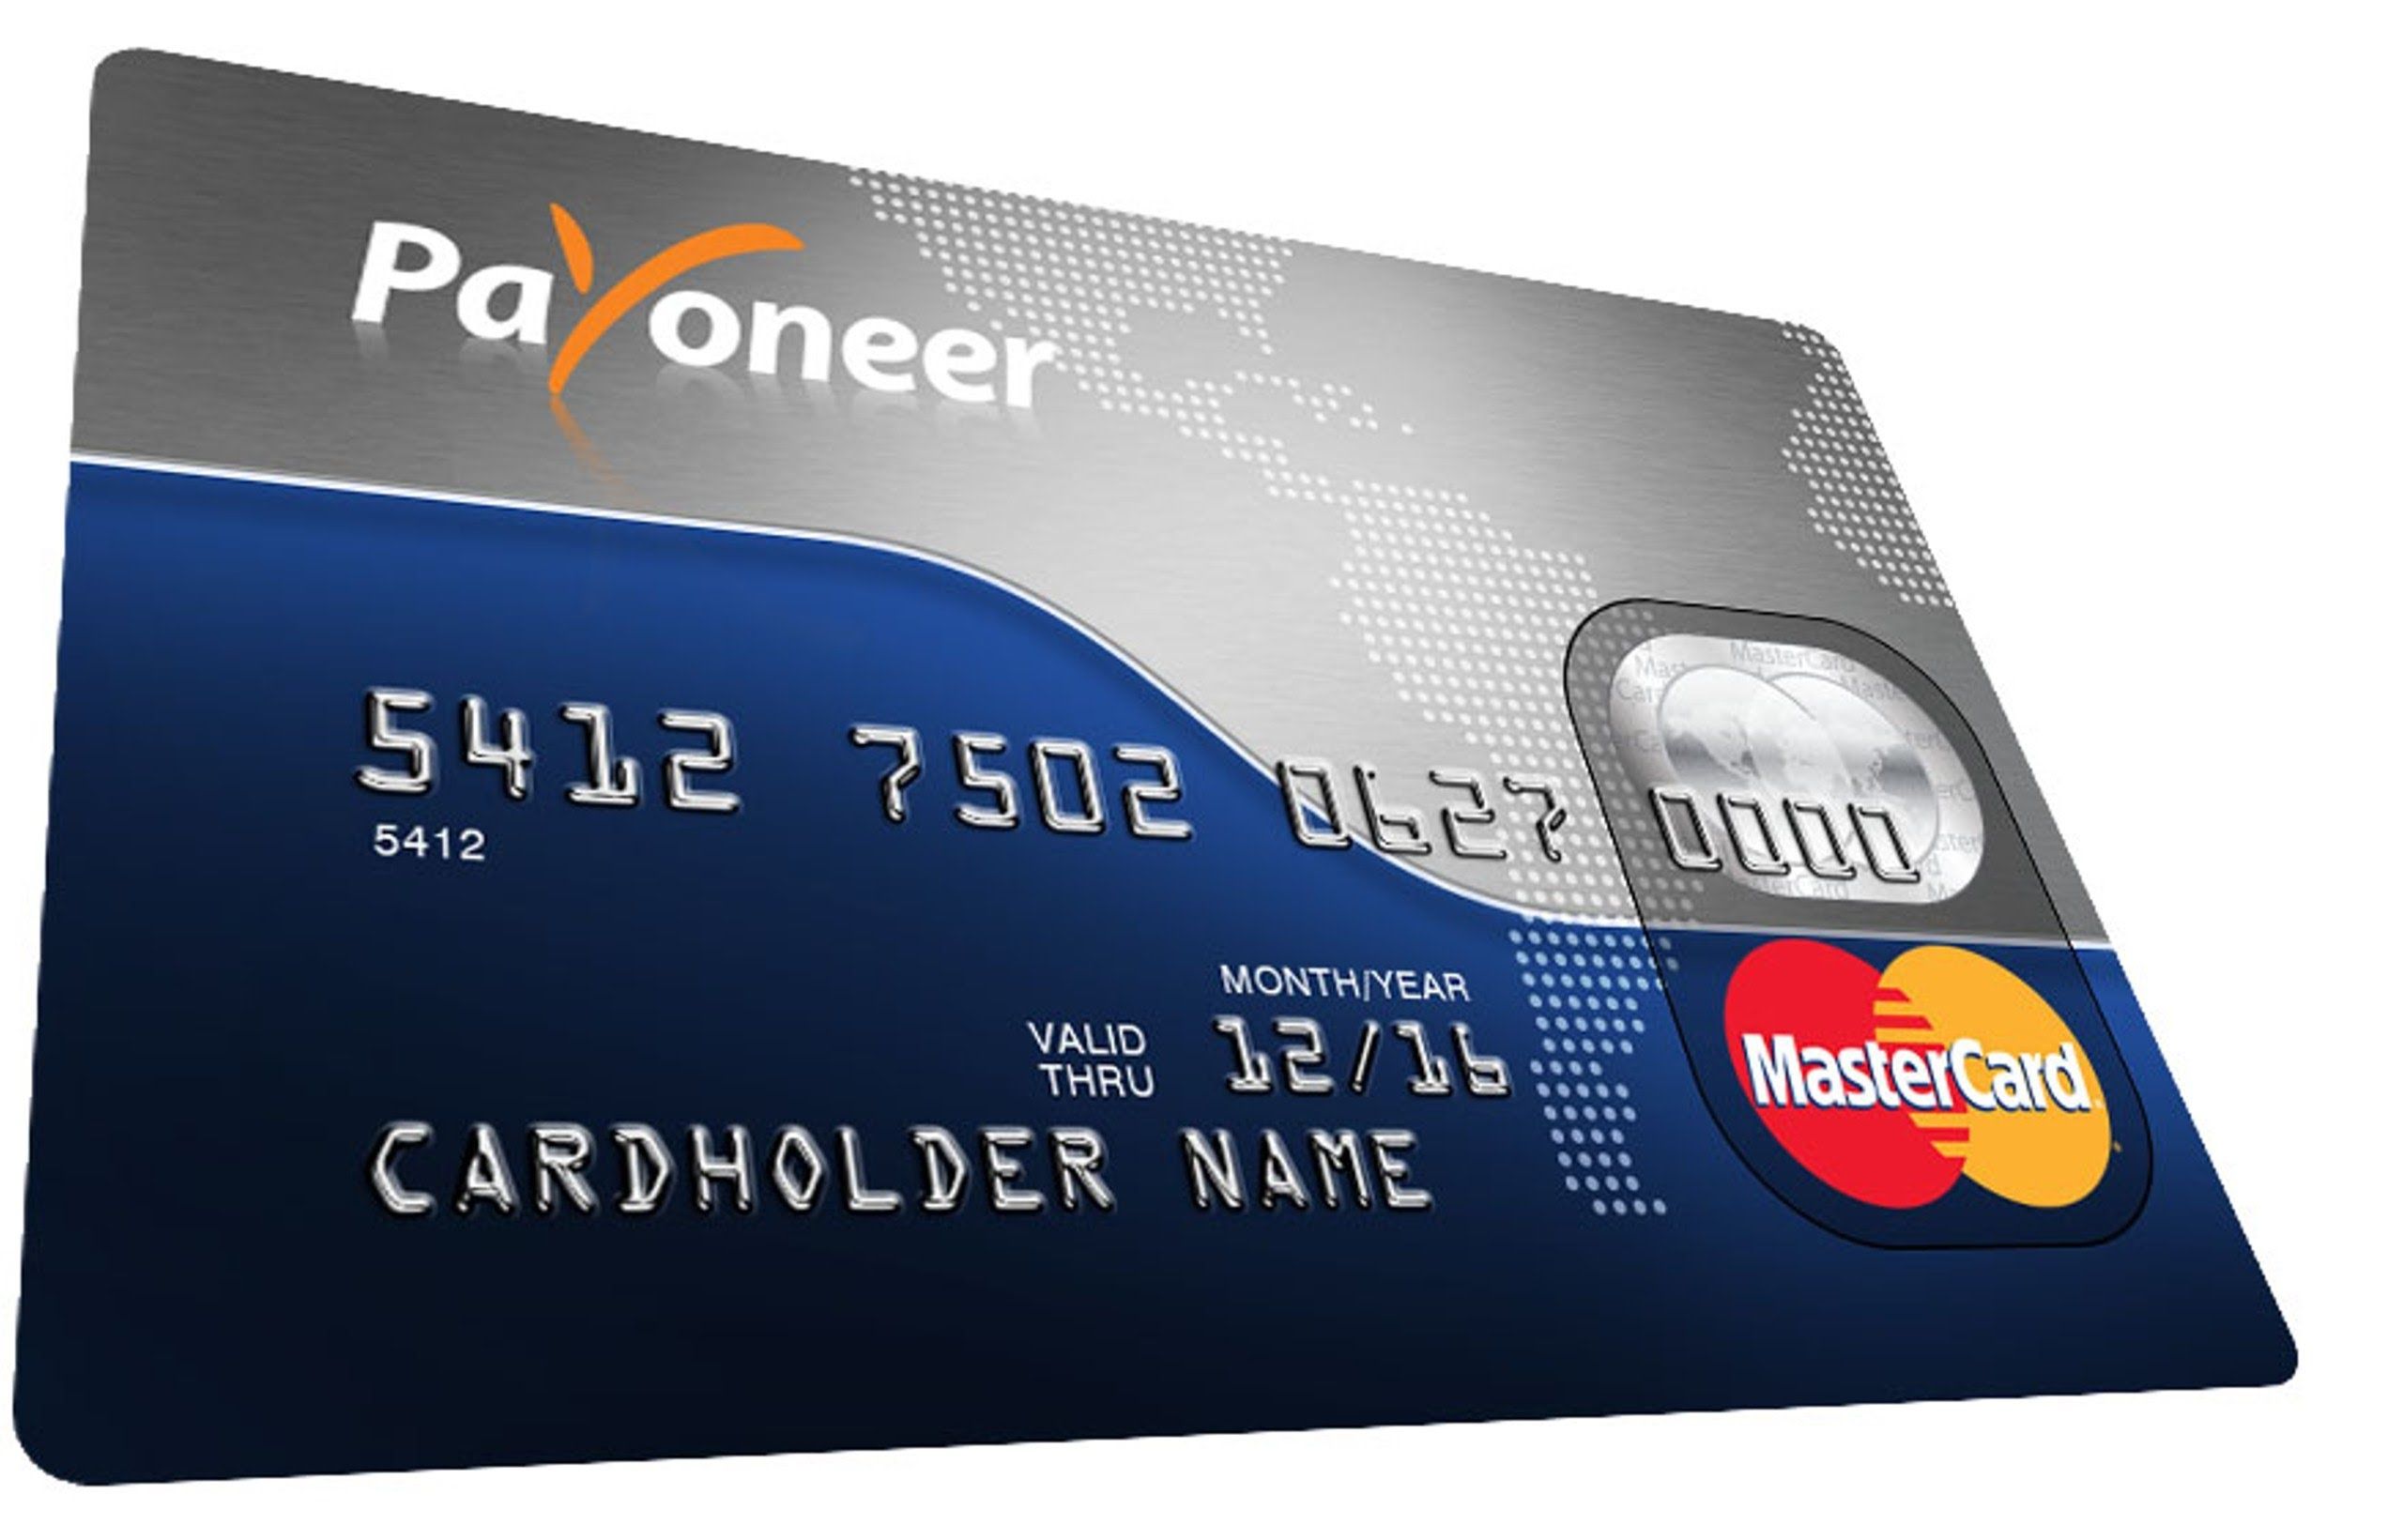 How to Order a Payoneer Mastercard for Free | Payoneer Help